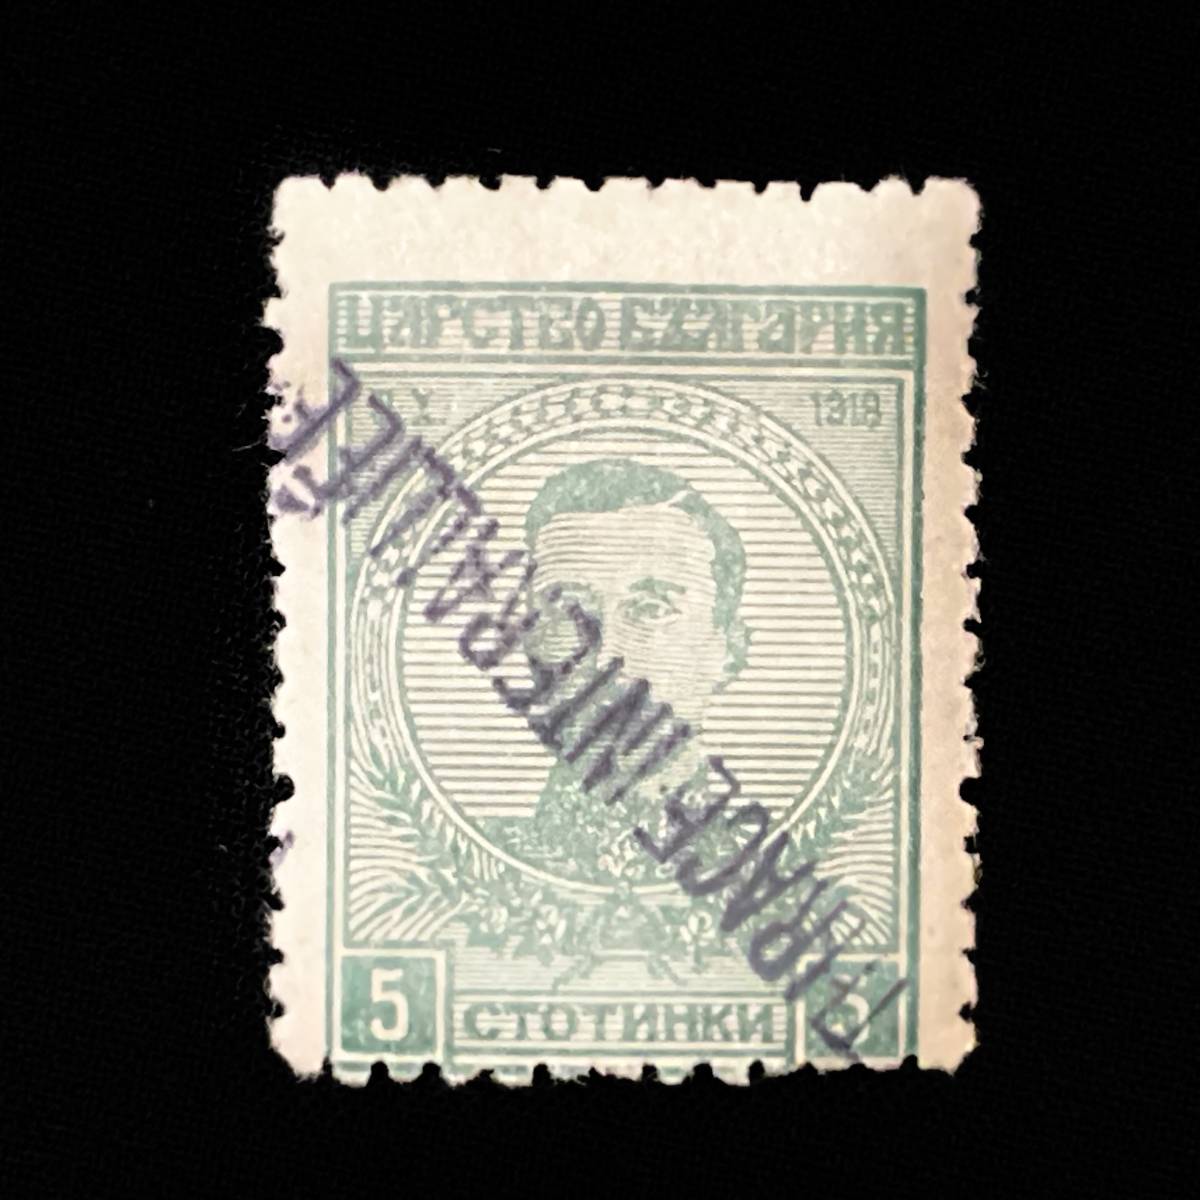  error stamp tiger Kia issue Balkan half island reality 3ka country . minute . diagonal reverse ... stamp Europe 1920 year 